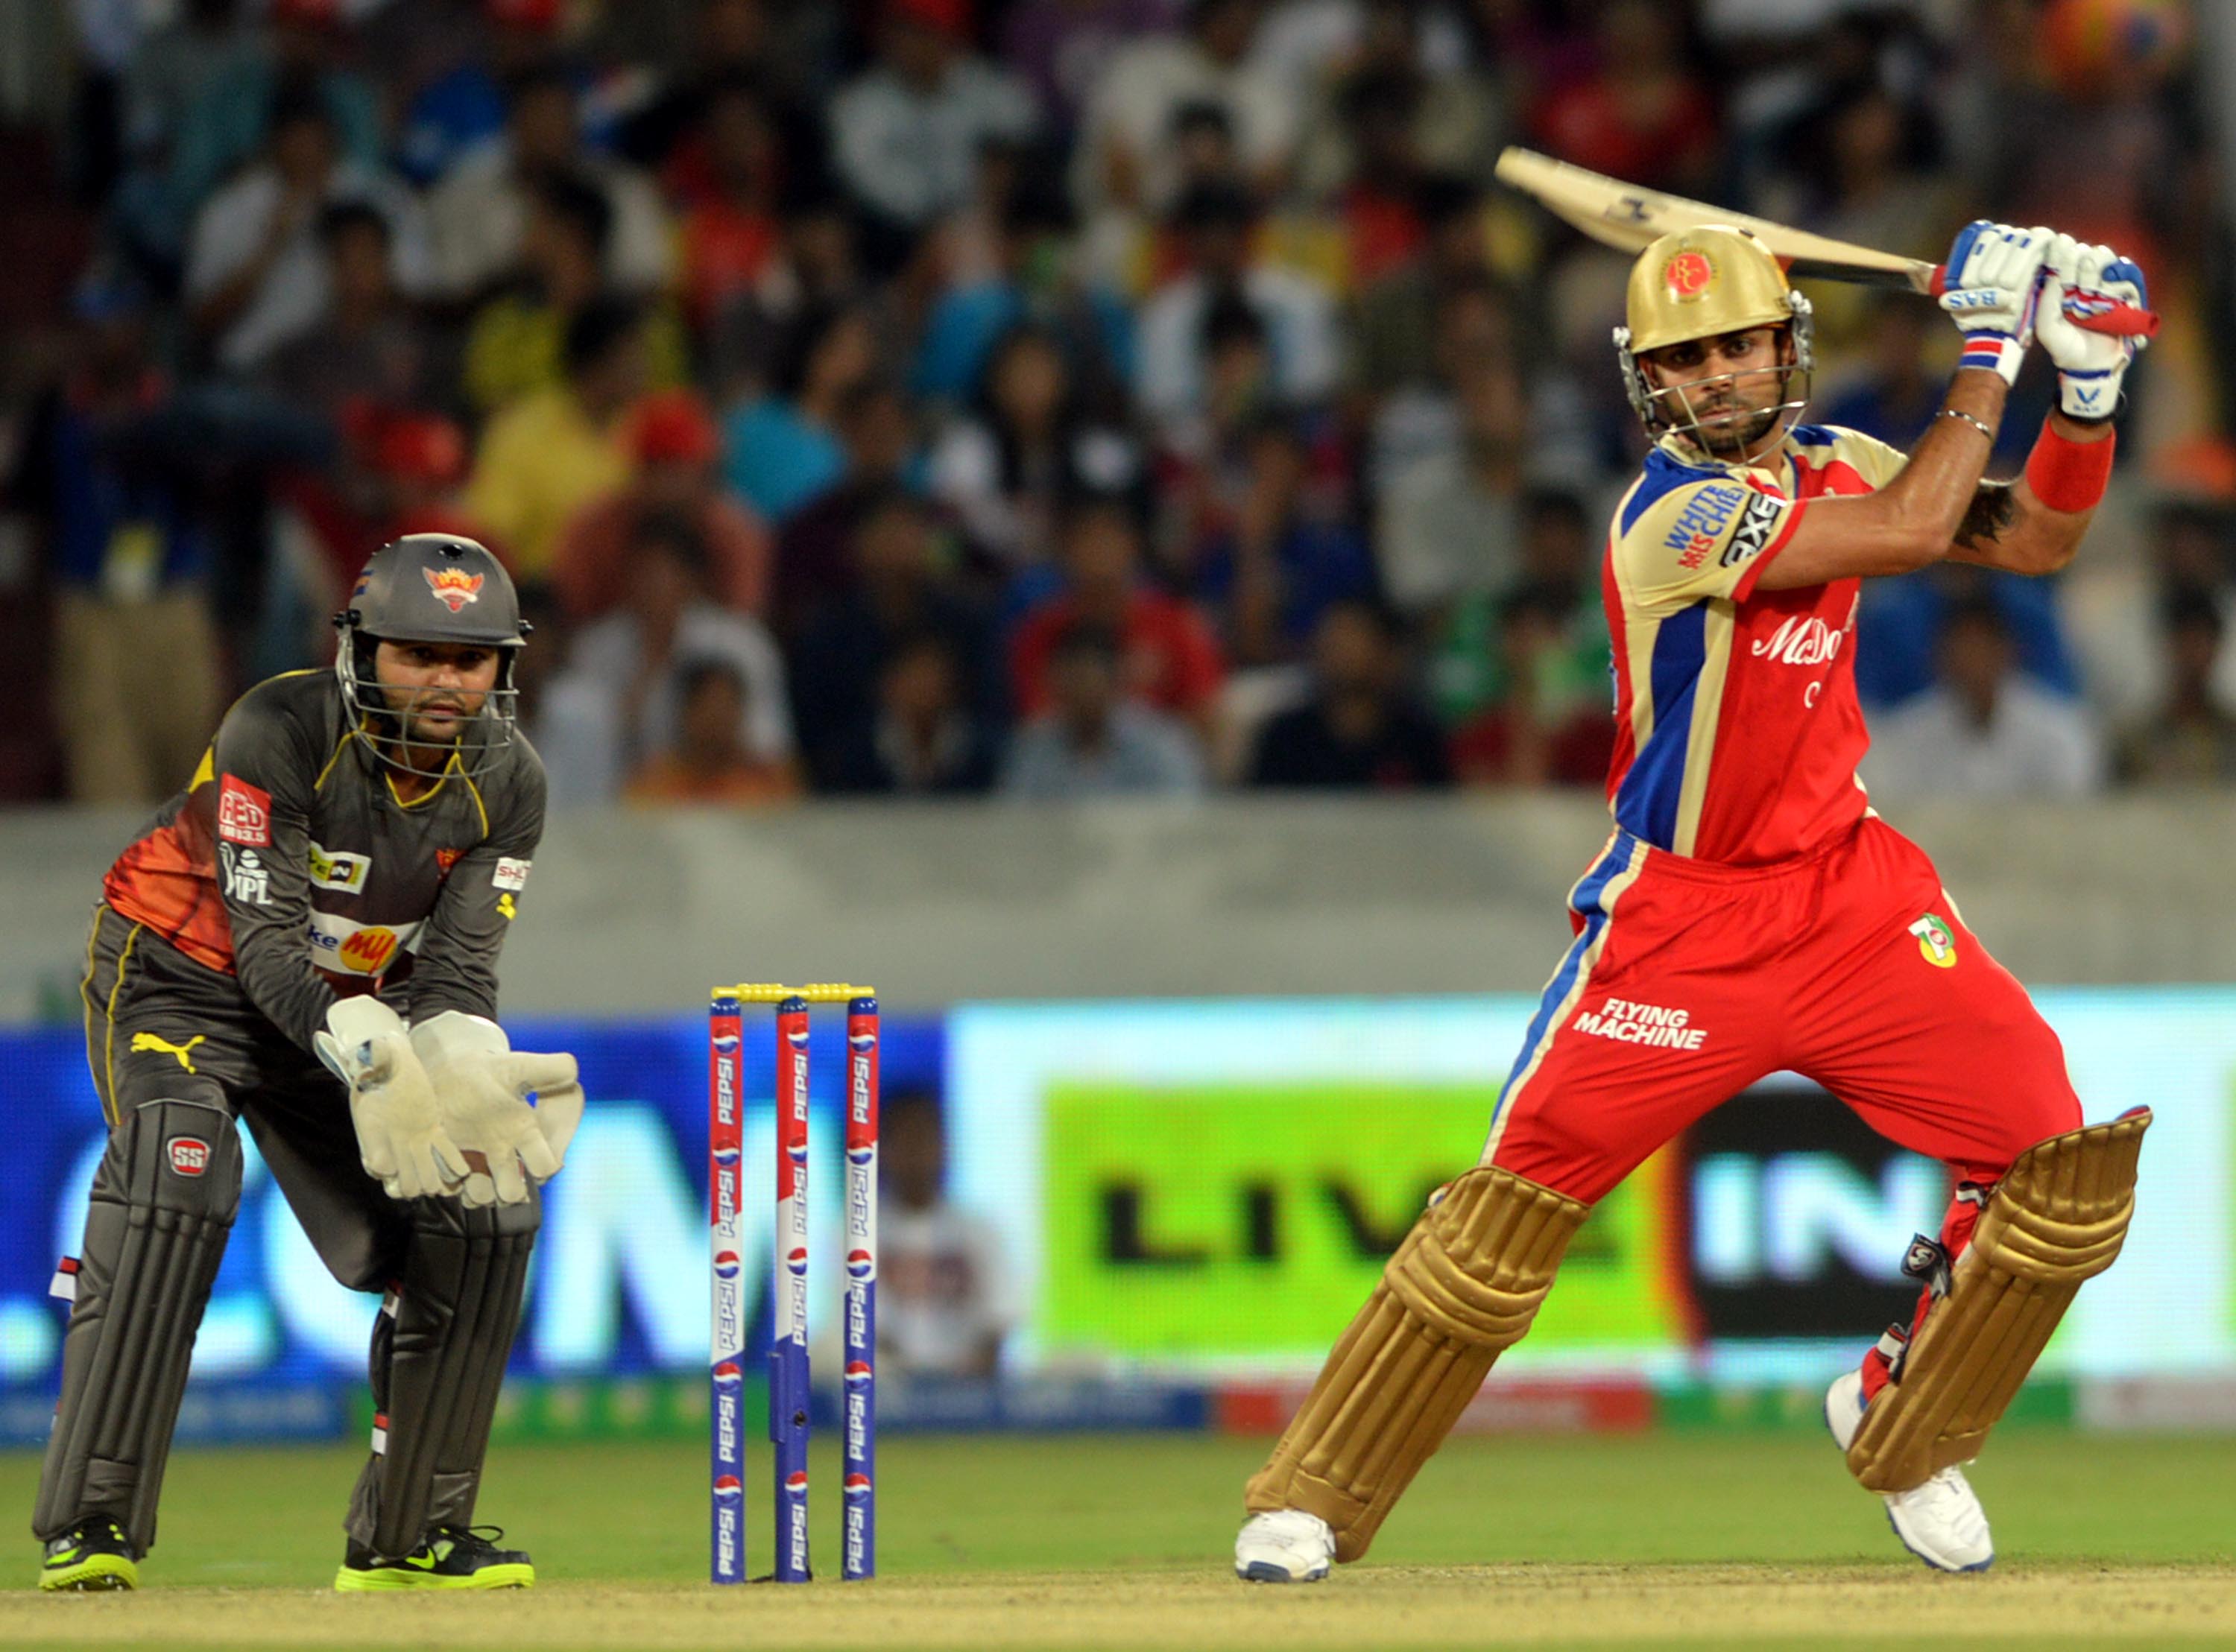 IPL 6: Sunrisers Hyderabad (Risers) vs (RCB) Royal Challengers